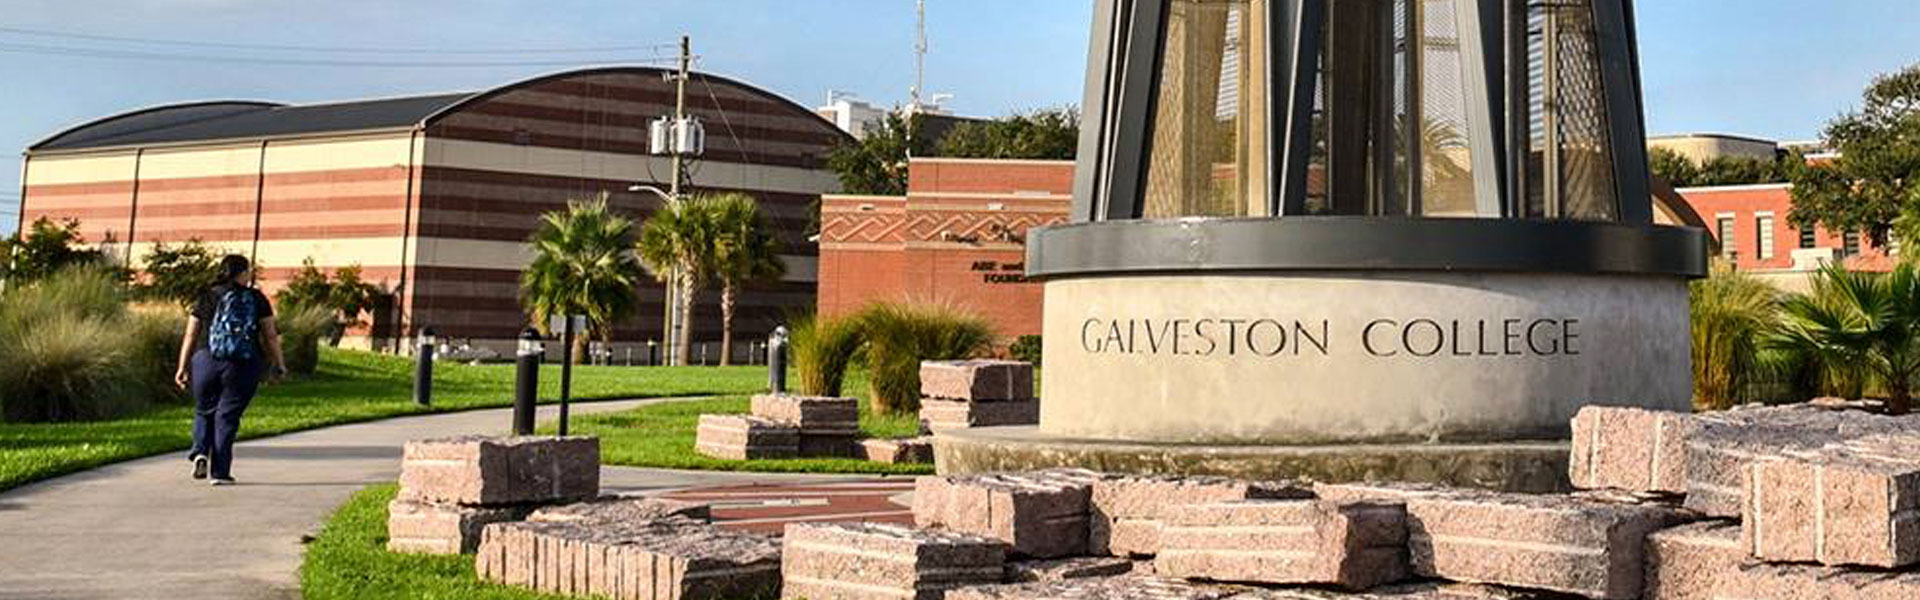 Galveston College, Galveston, TX